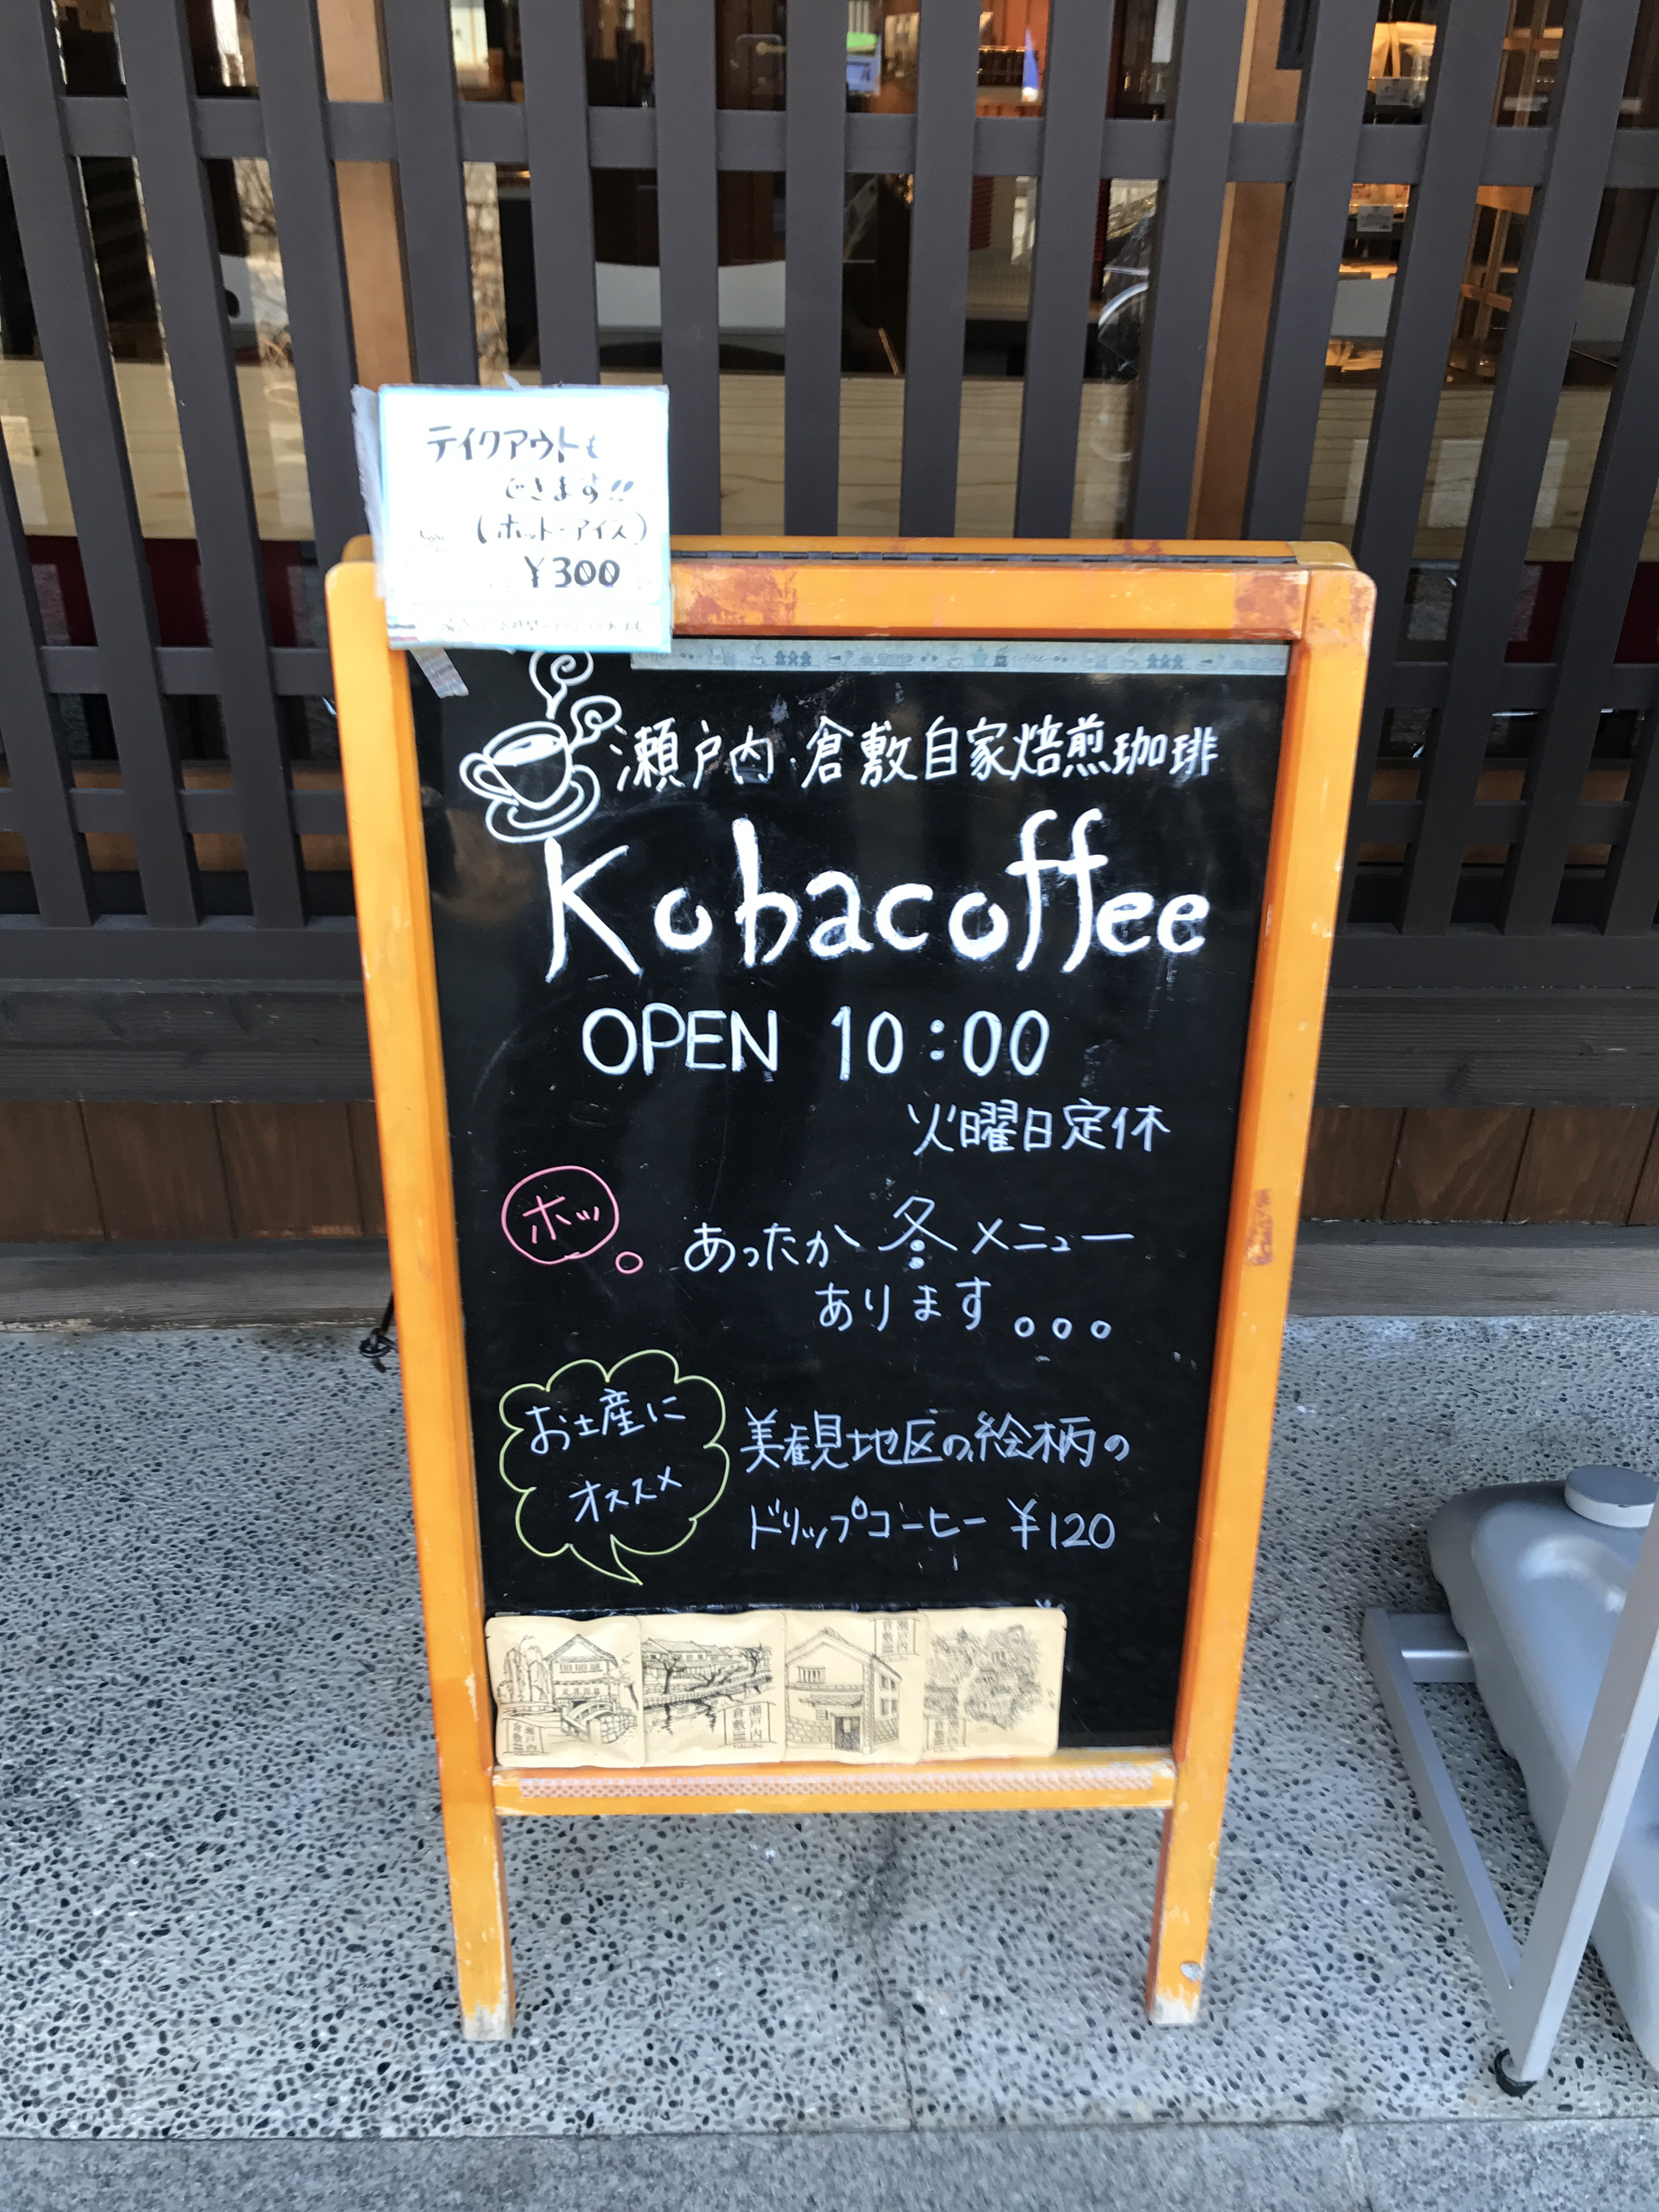 Koba coffee @ 倉敷美観地区